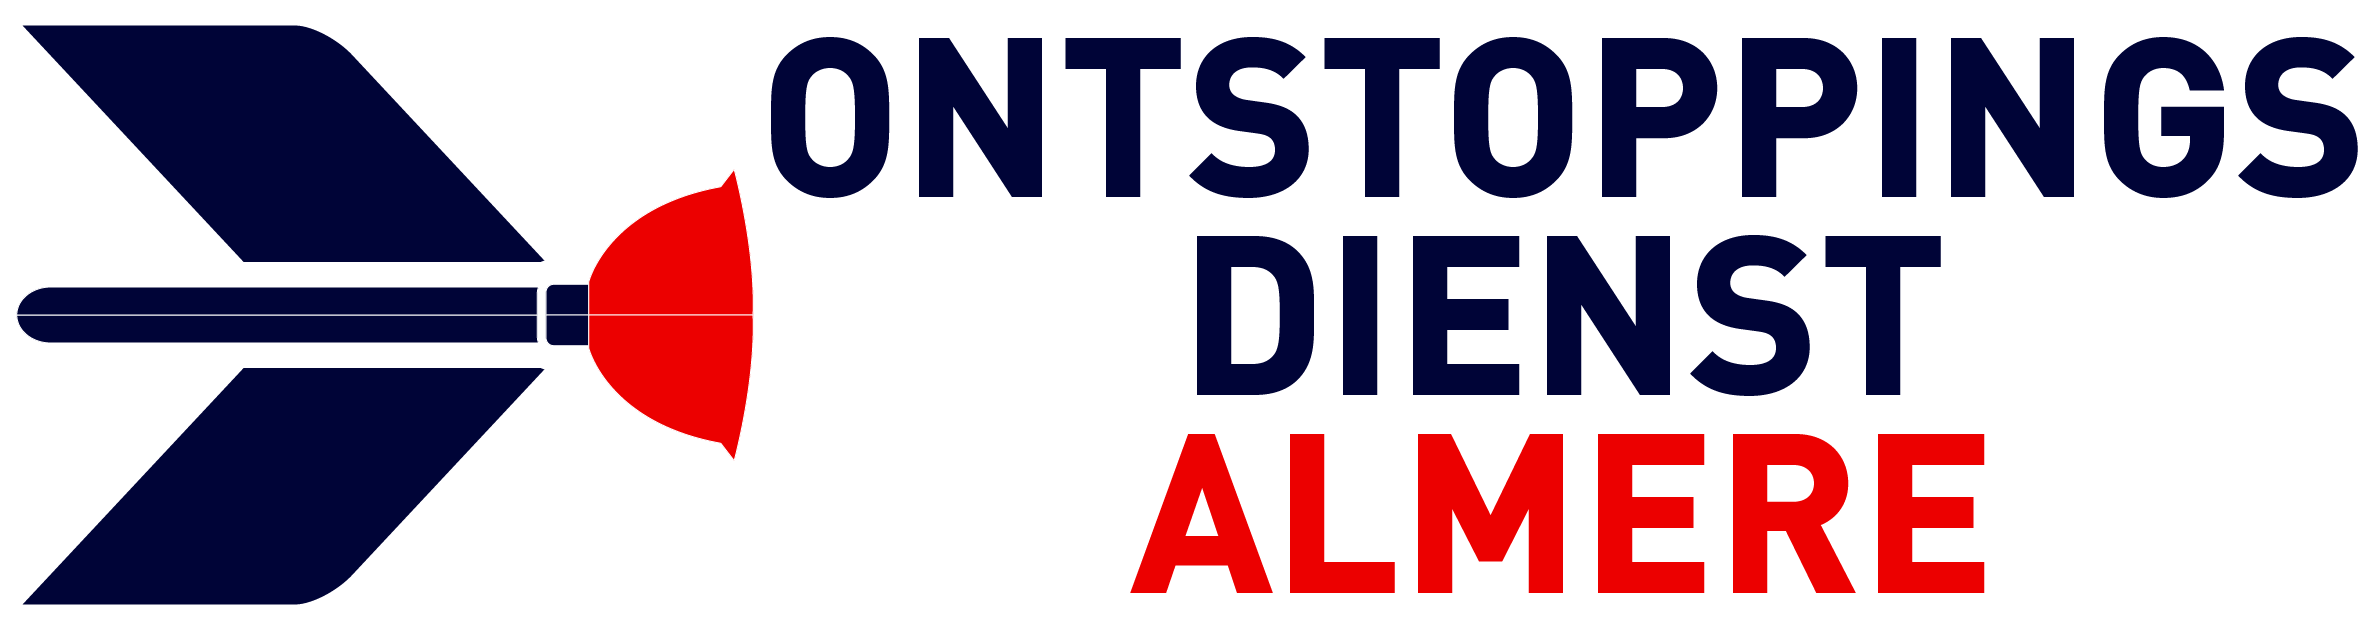 Ontstoppingsdienst Almere logo